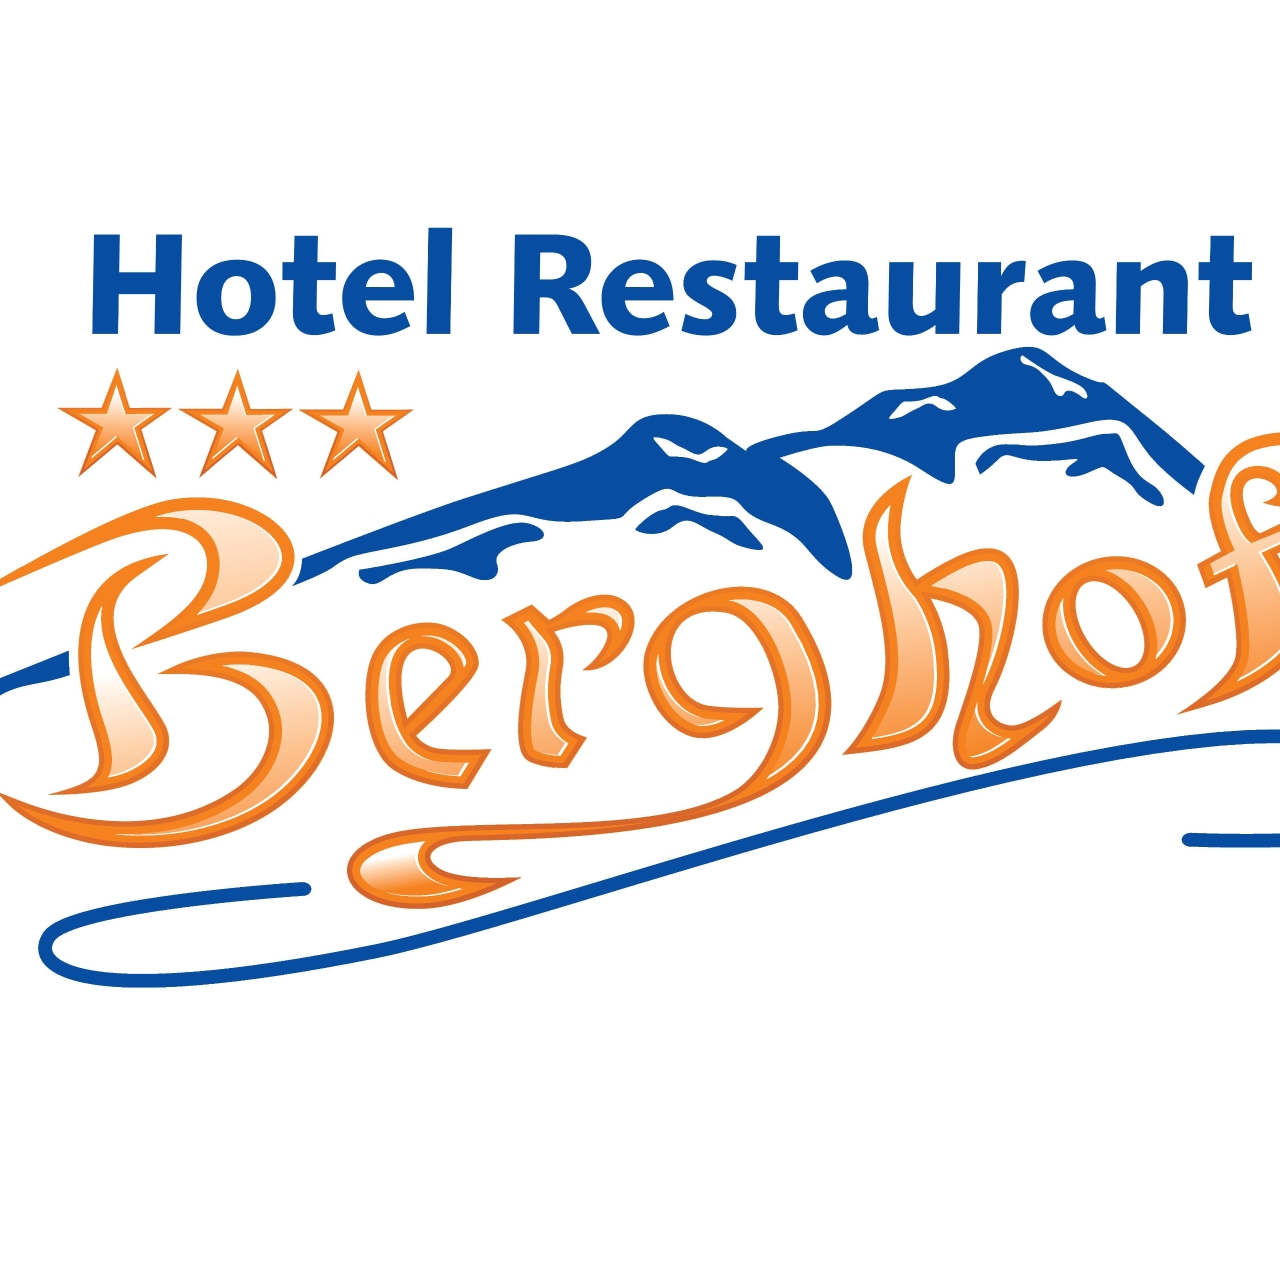 Hotel Berghof - 3 HRS star hotel in Berghausen (Rhineland-Palatinate)